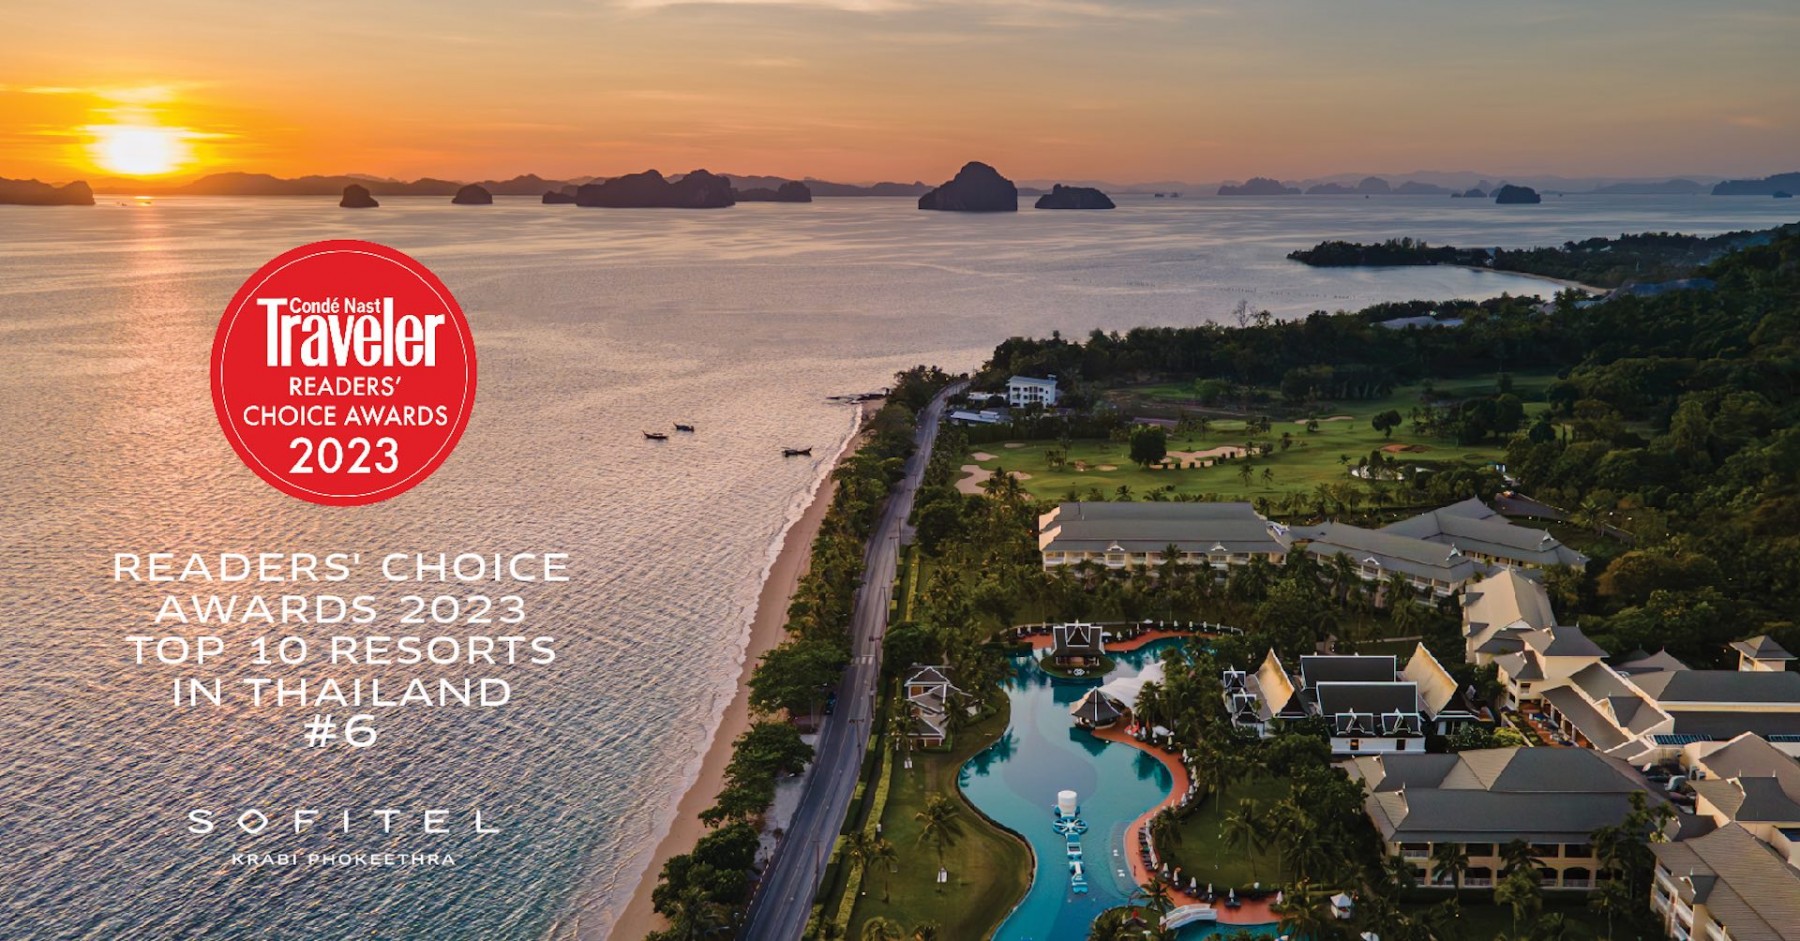 Condé Nast Reader's Choice Awards 2023 Thailand